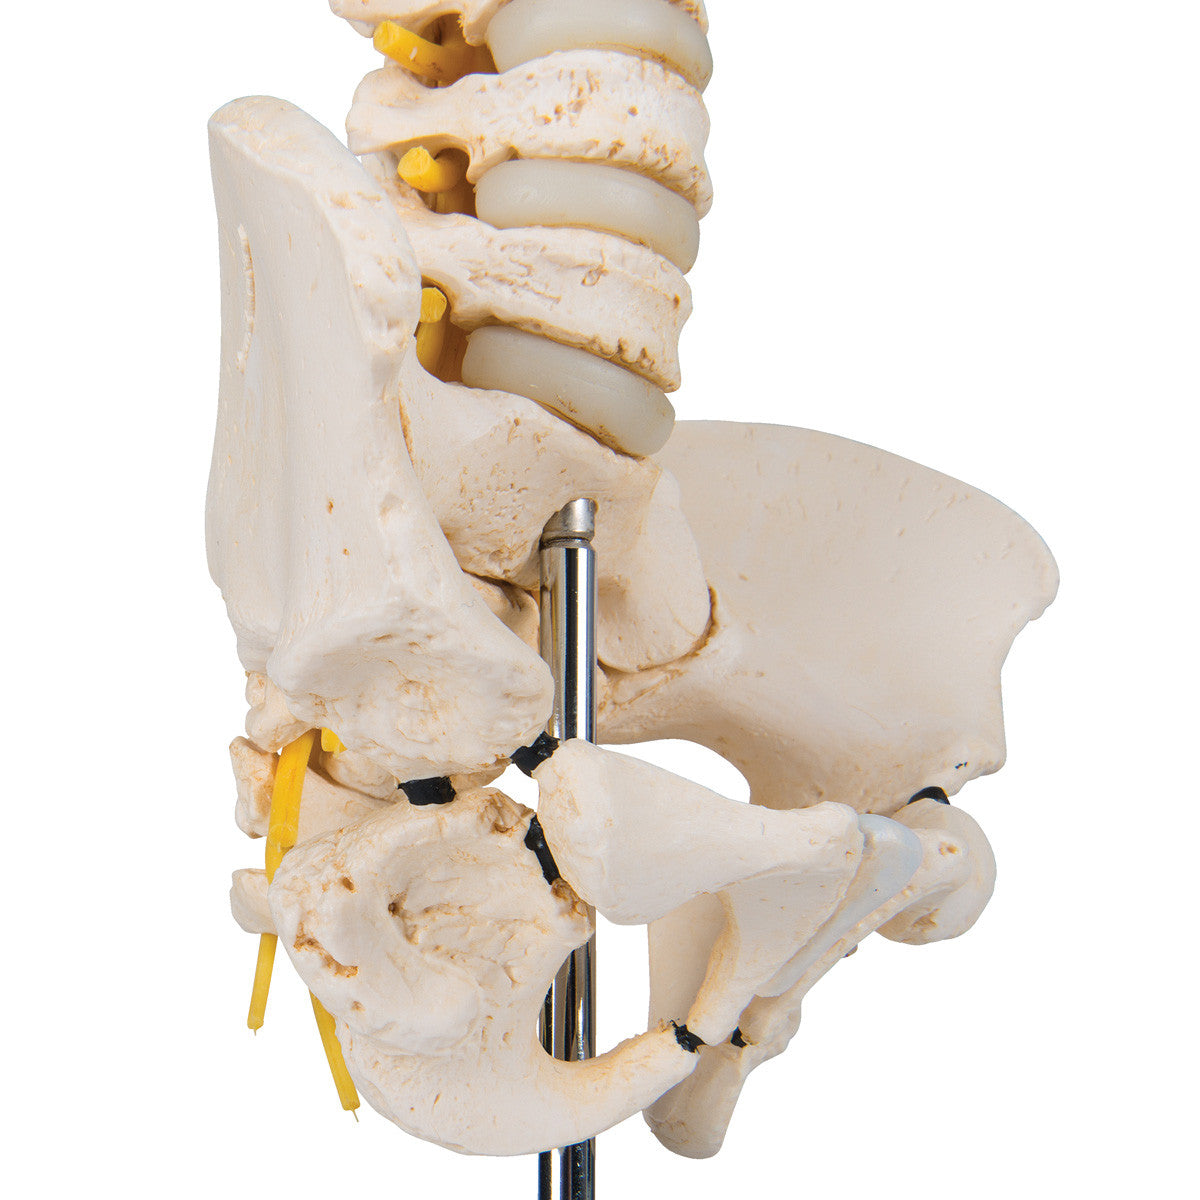 a52_06_1200_1200_bonelike-childs-vertebral-column-model-3b-smart-anatomy__29710.1589753190.1280.1280.jpg